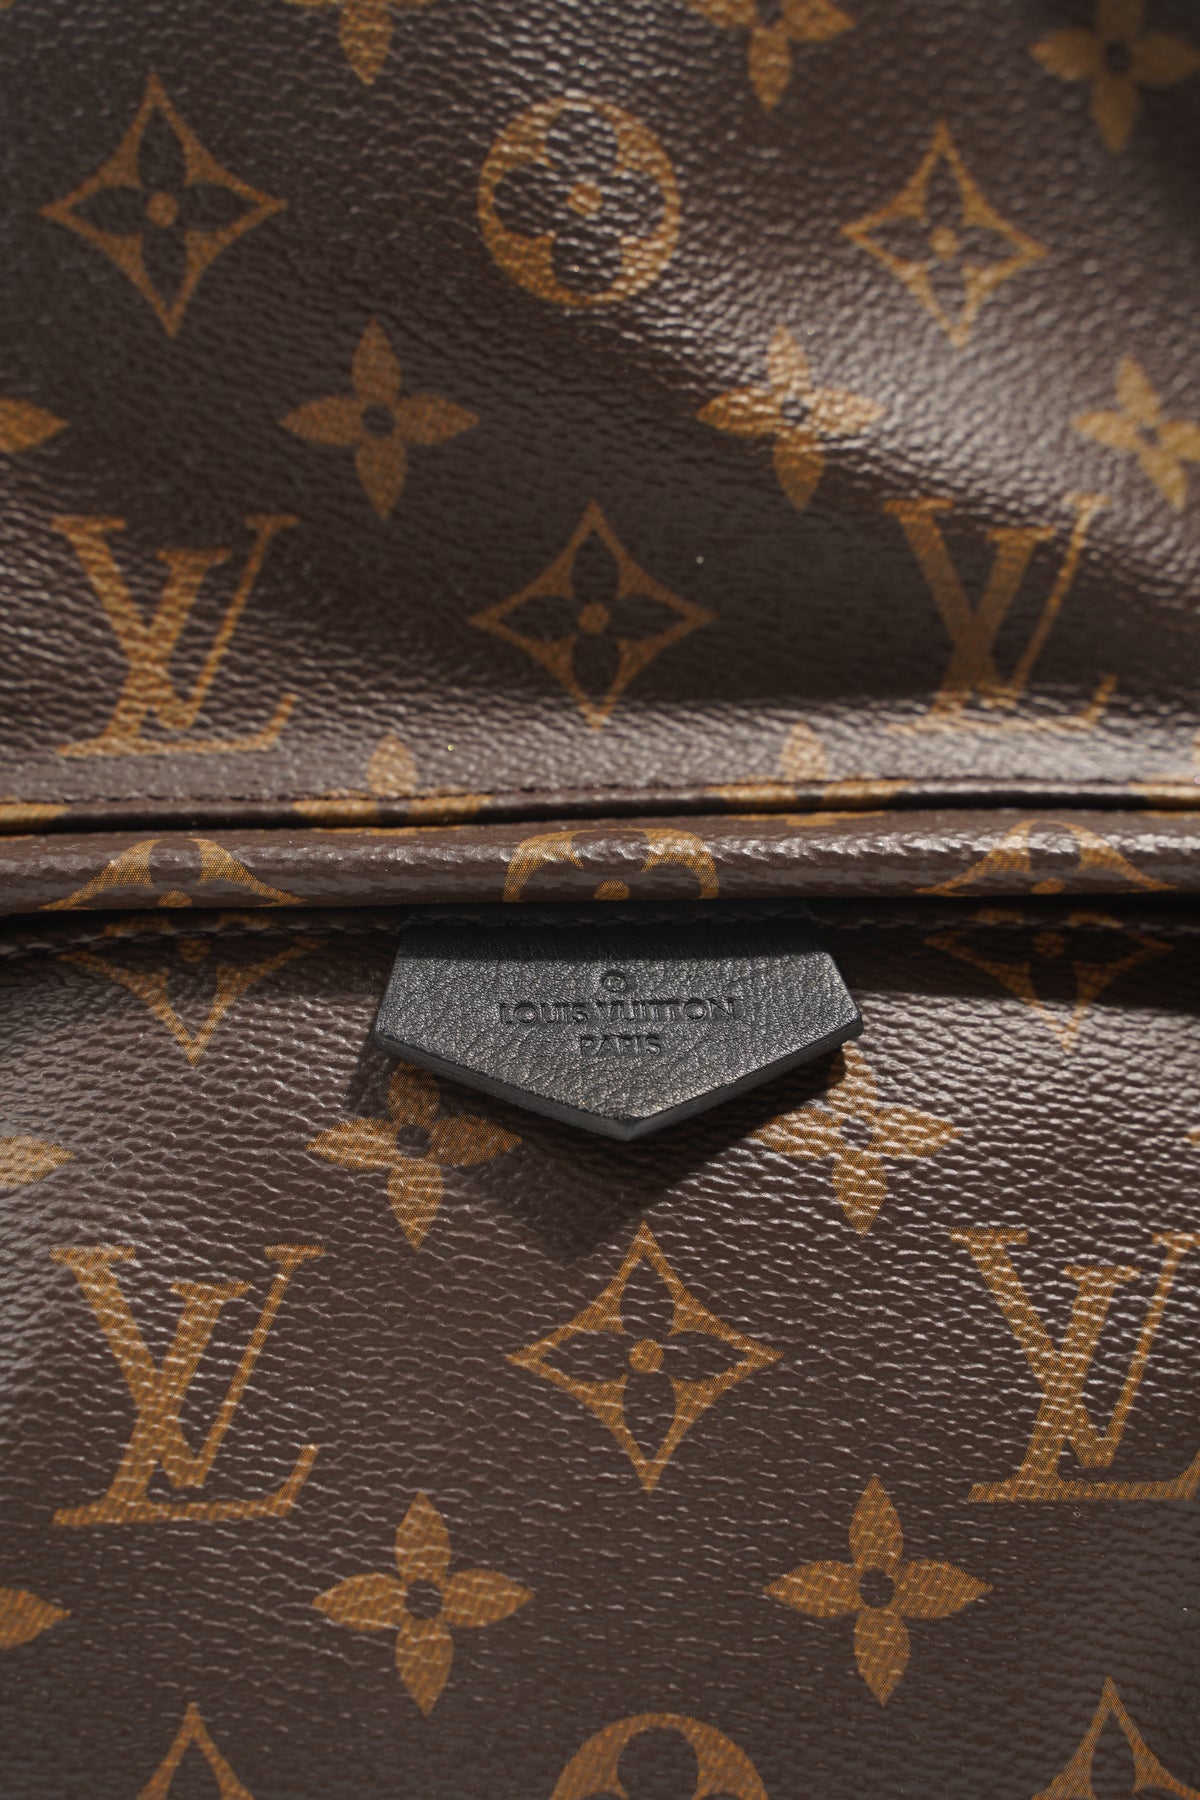 Louis Vuitton Monogram Canvas Palm Springs PM Backpack - My Luxury Bargain  Turkey